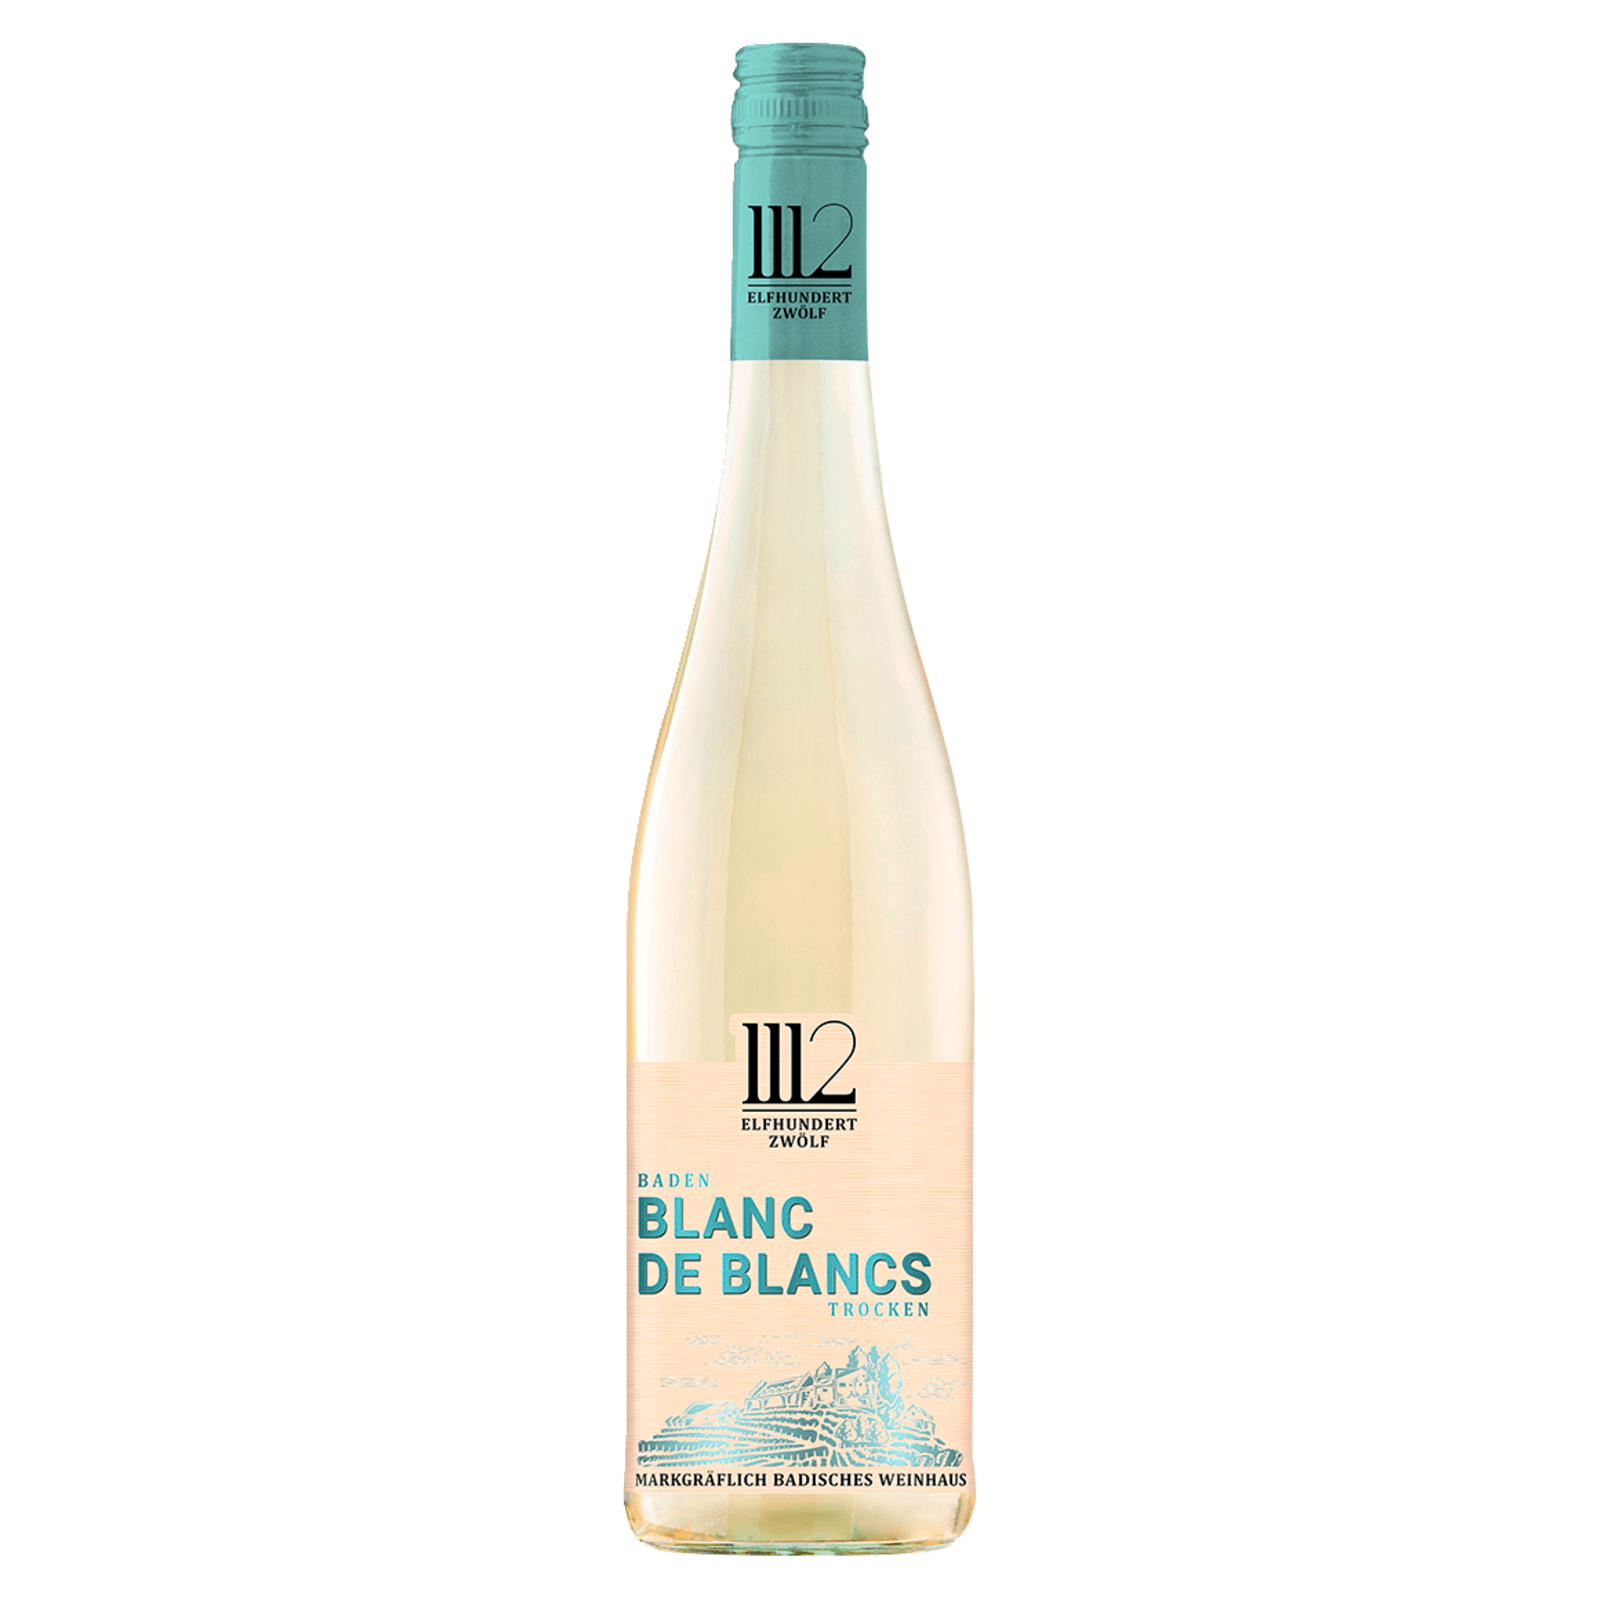 Macià Batle Santa Clara Blanc de Blancs Mallorca Vino … für 8,95€ von Lidl